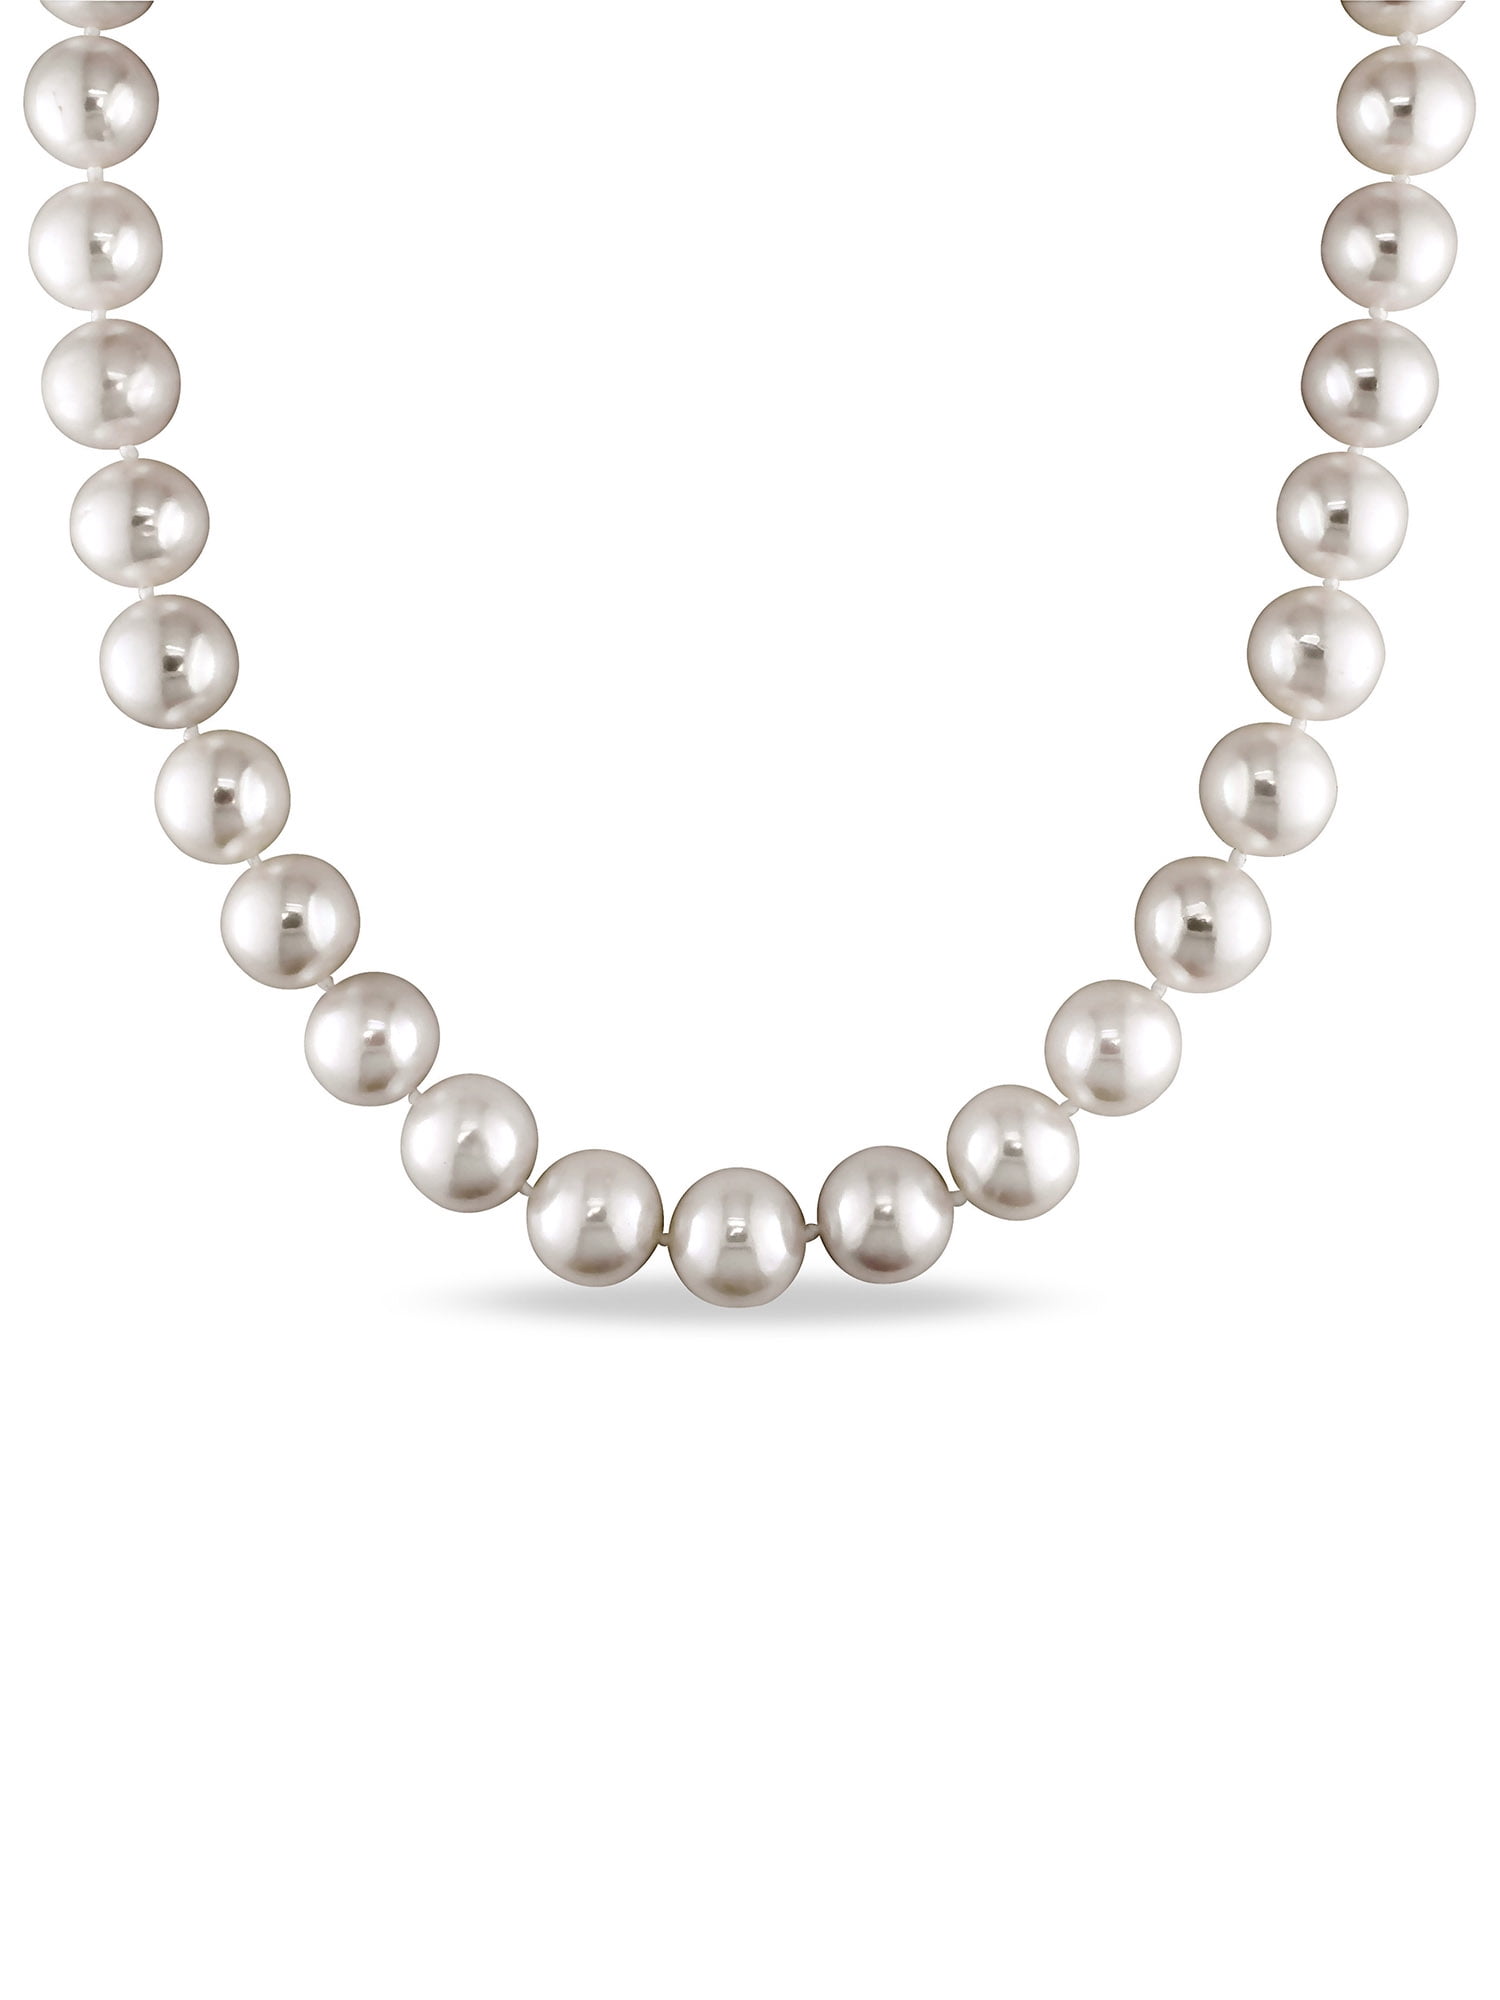 Vintage Double Strand Pearl Necklace Sapphire Diamond Clasp 